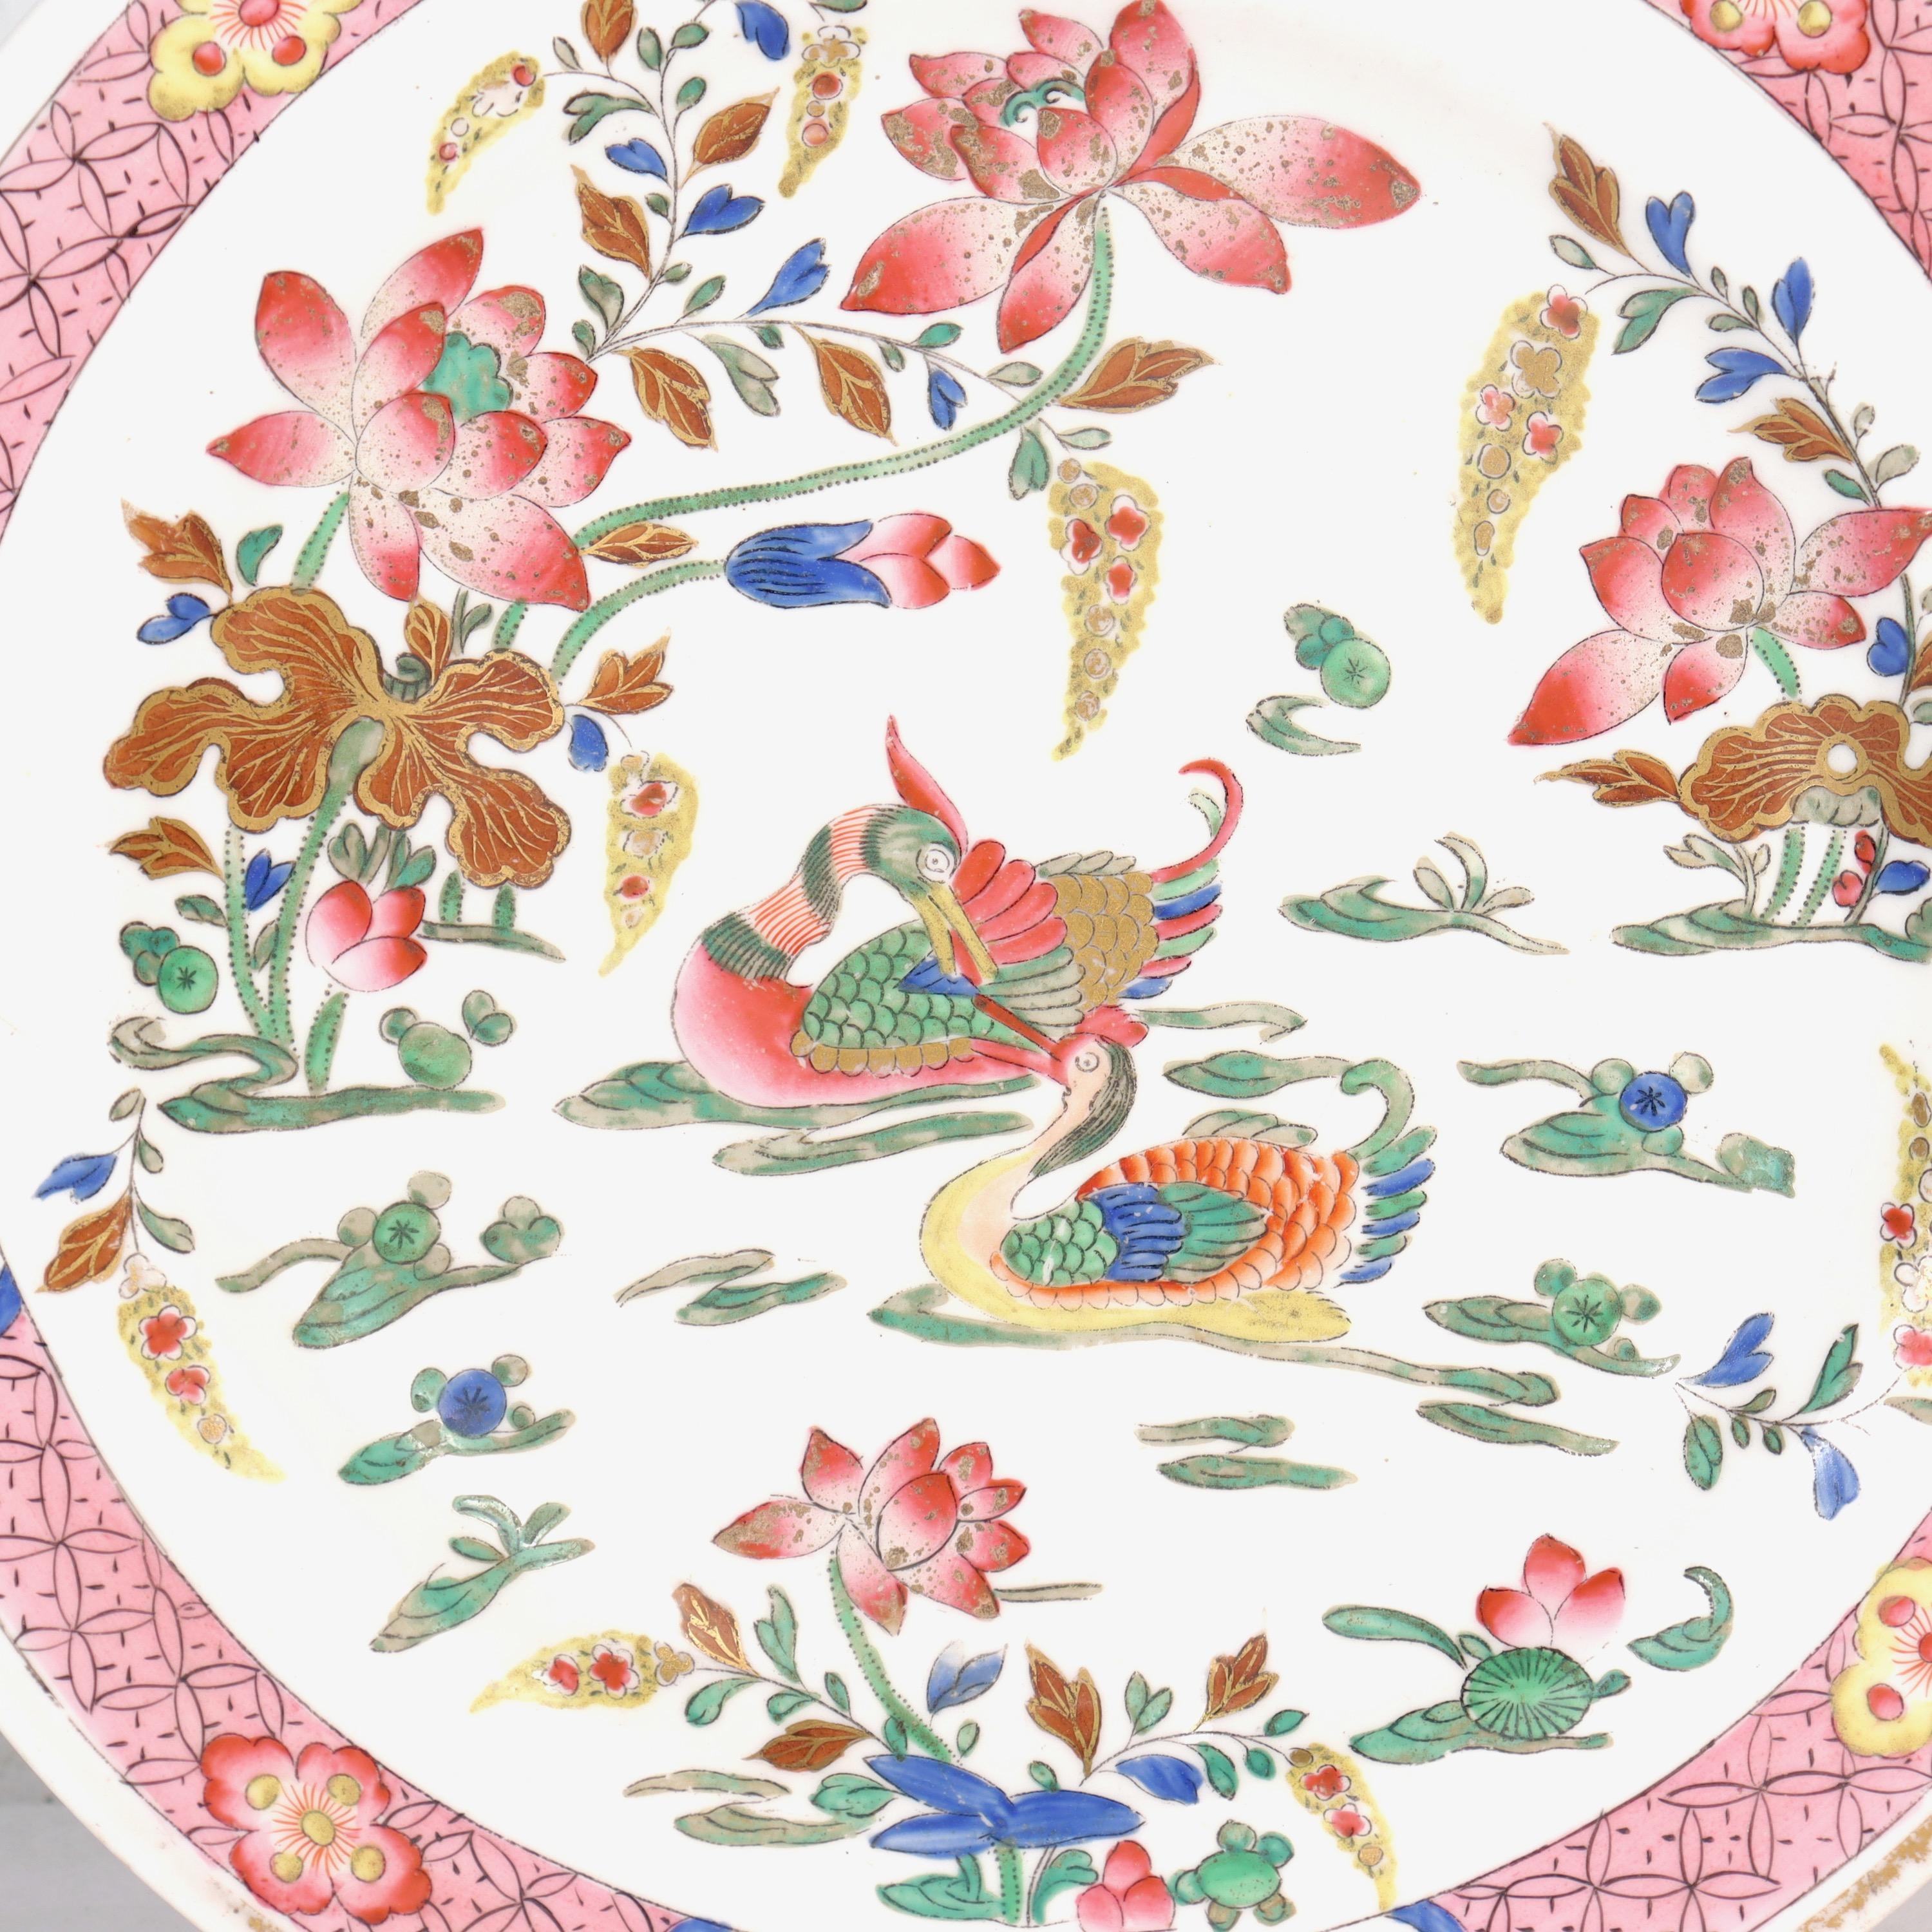 19th century spode china patterns